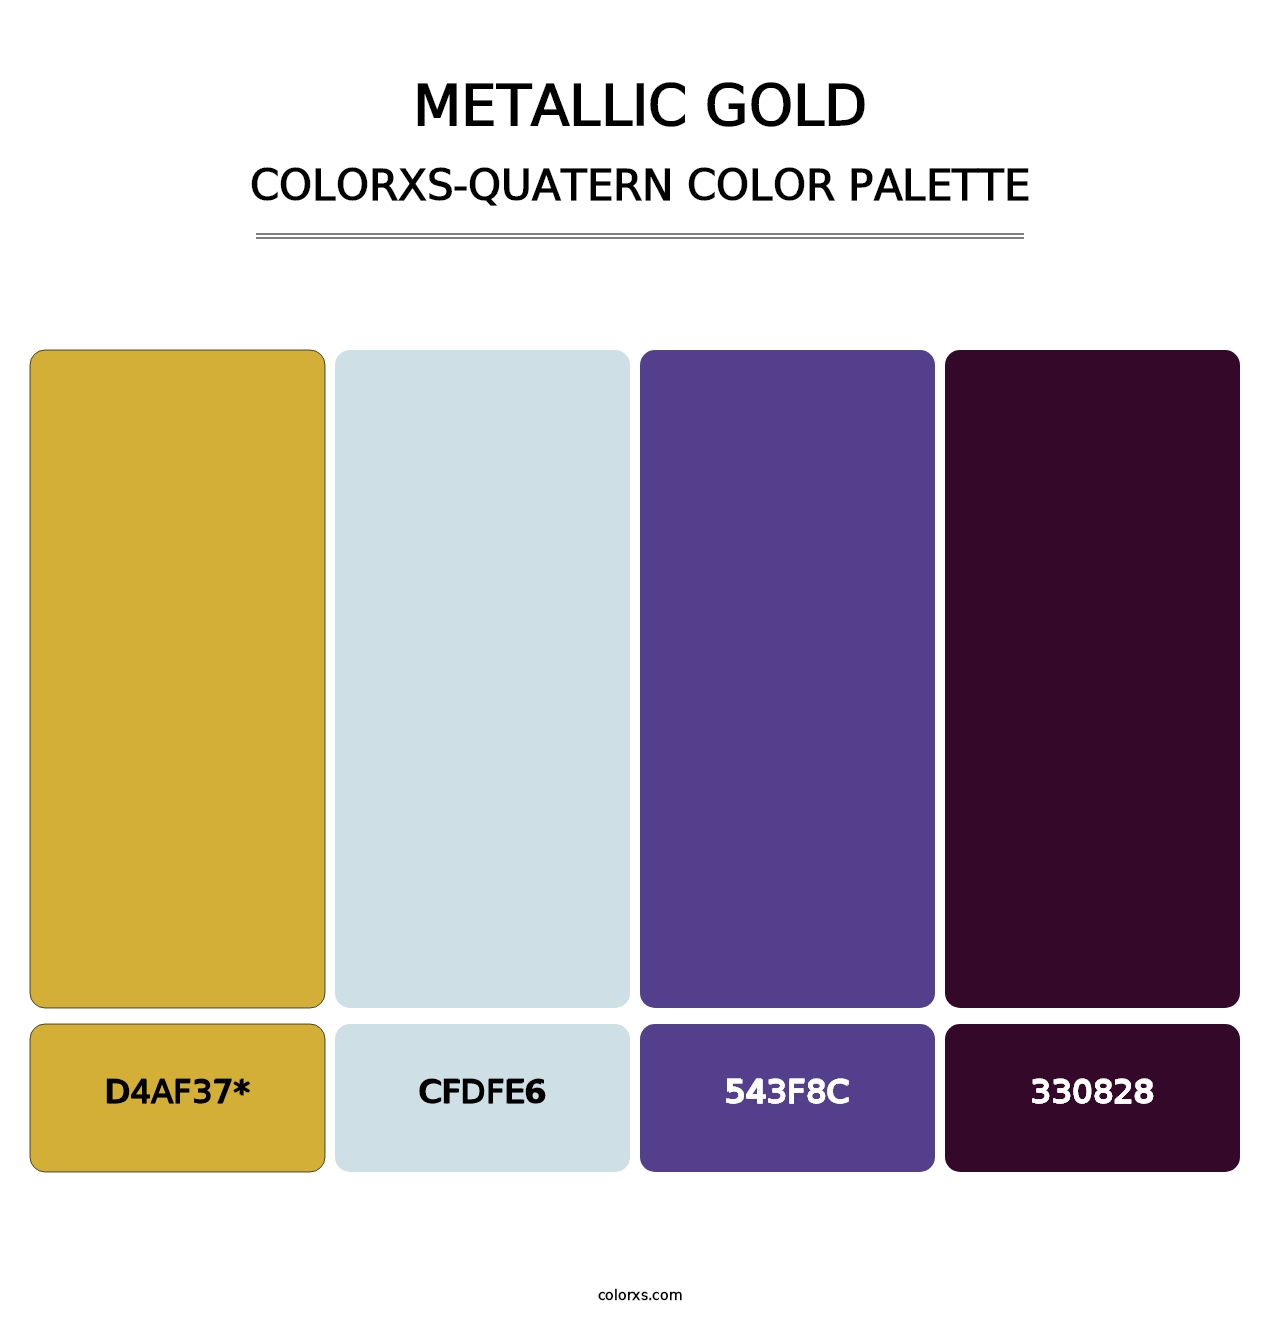 Metallic Gold - Colorxs Quatern Palette